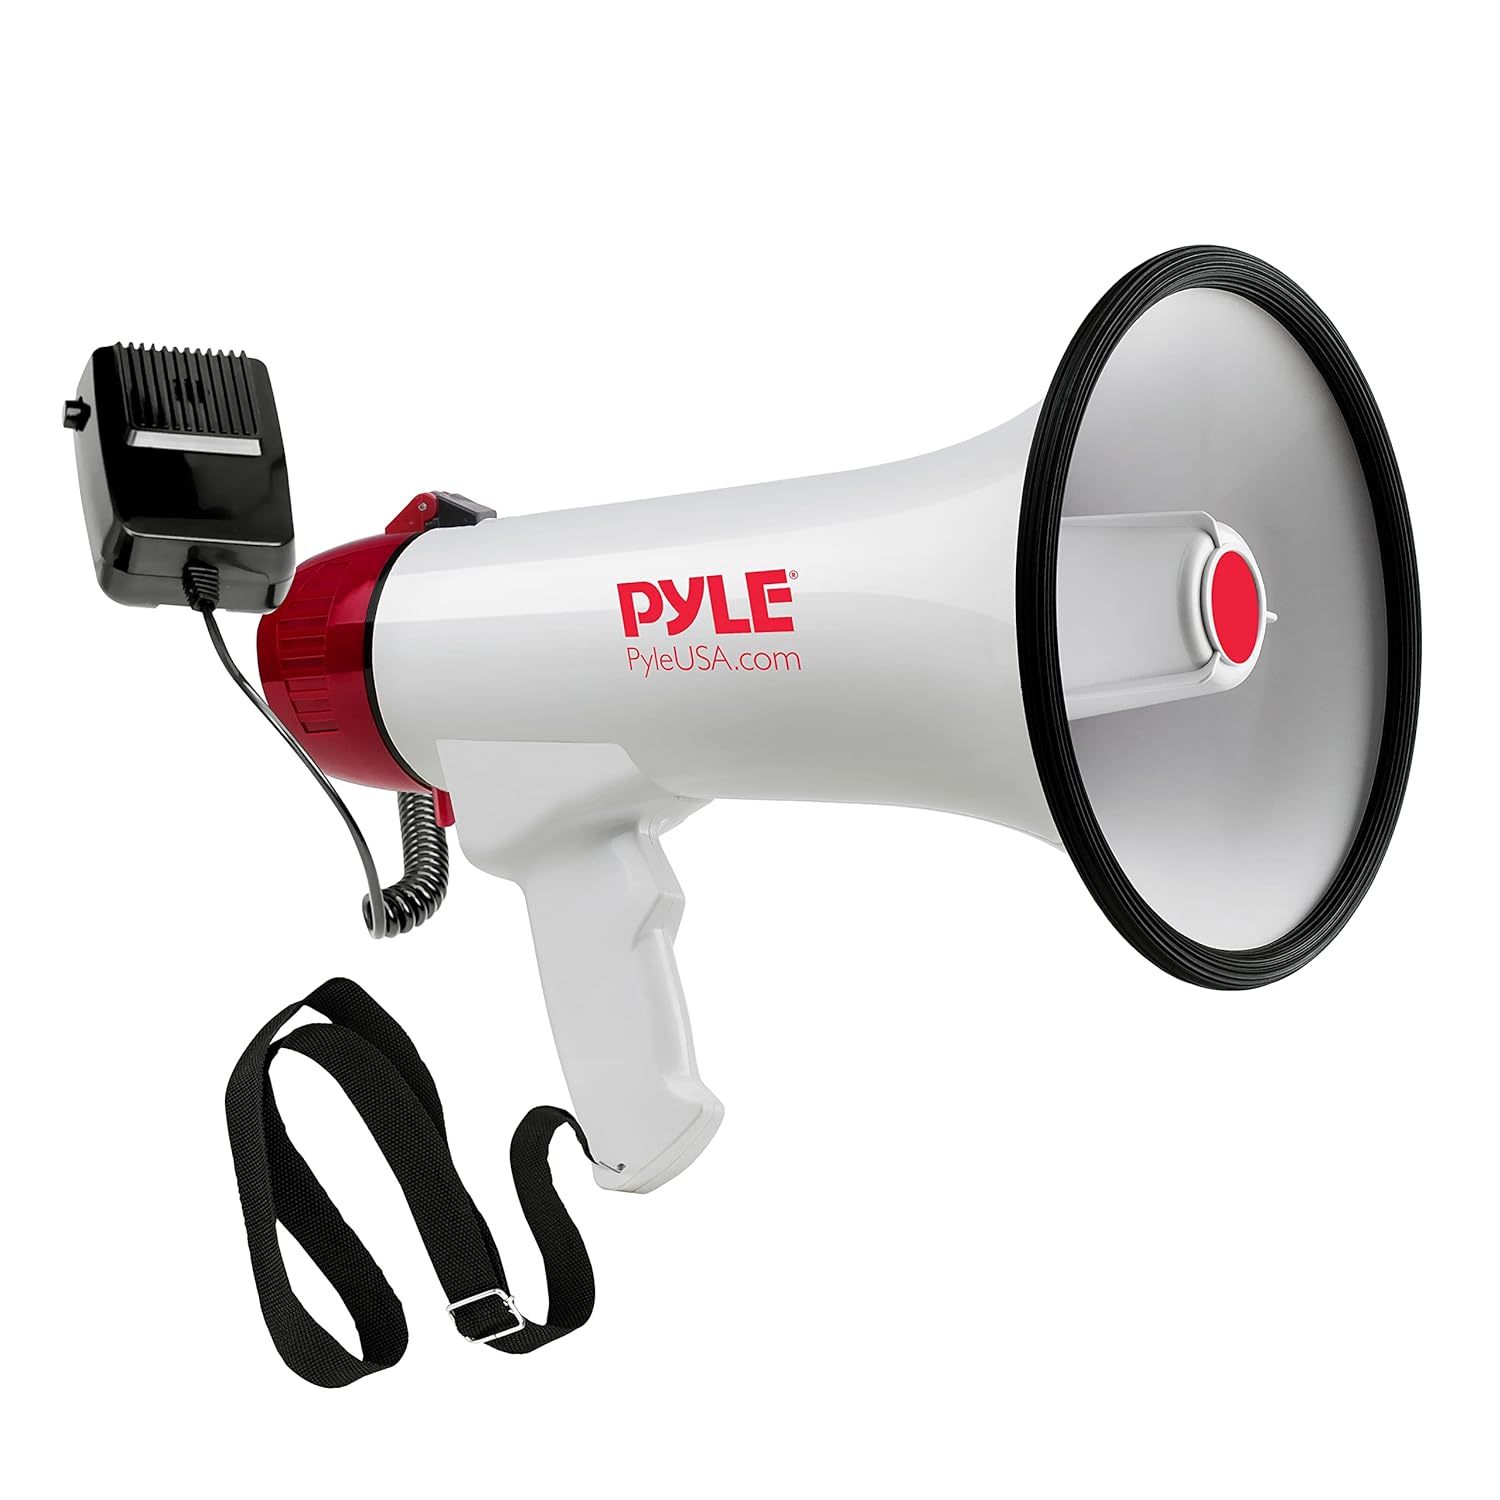 Pyle 40 Watt Professional Megaphone Clear Sound & Ergonomic Grip - Multi-Functio - $45.99